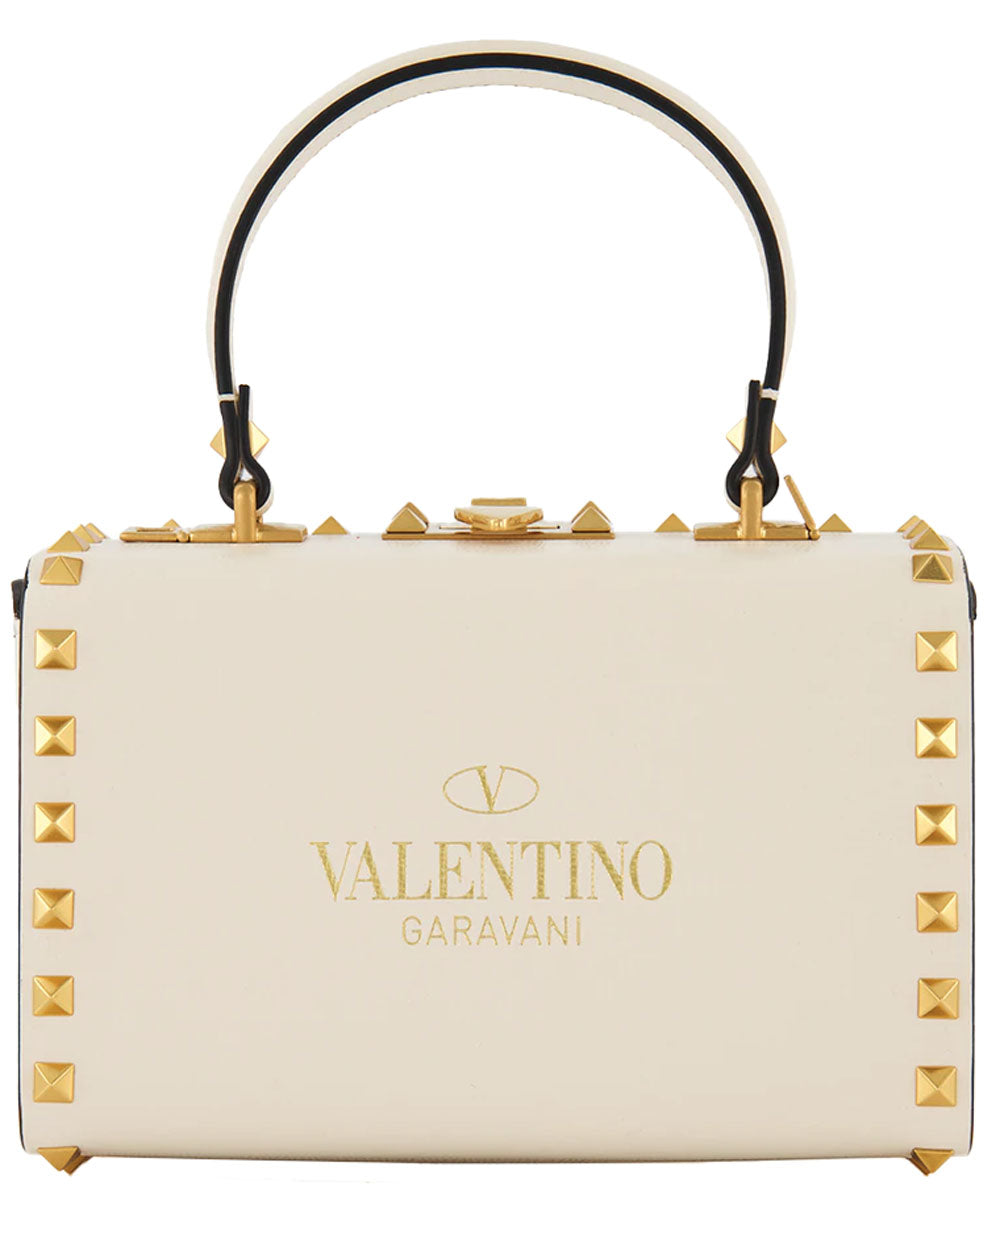 Valentino Garavani - Alcove Black Leather Rockstud Box Bag